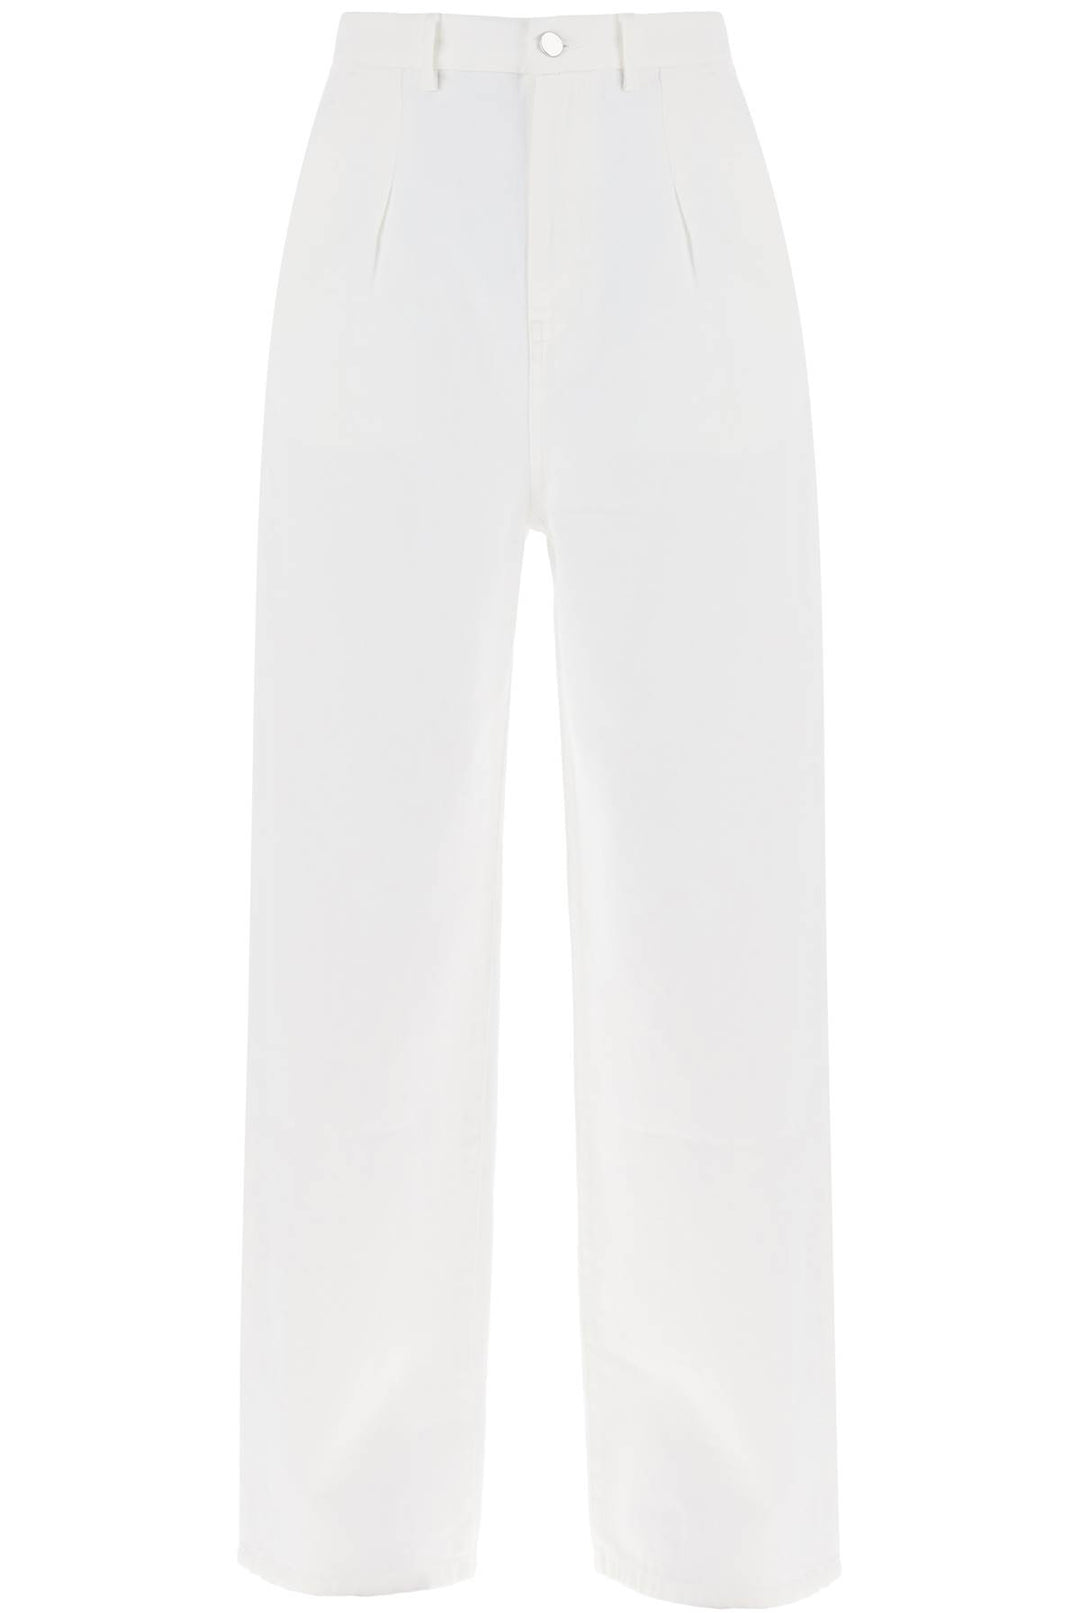 Loulou Studio Attu Oversized Jeans   White